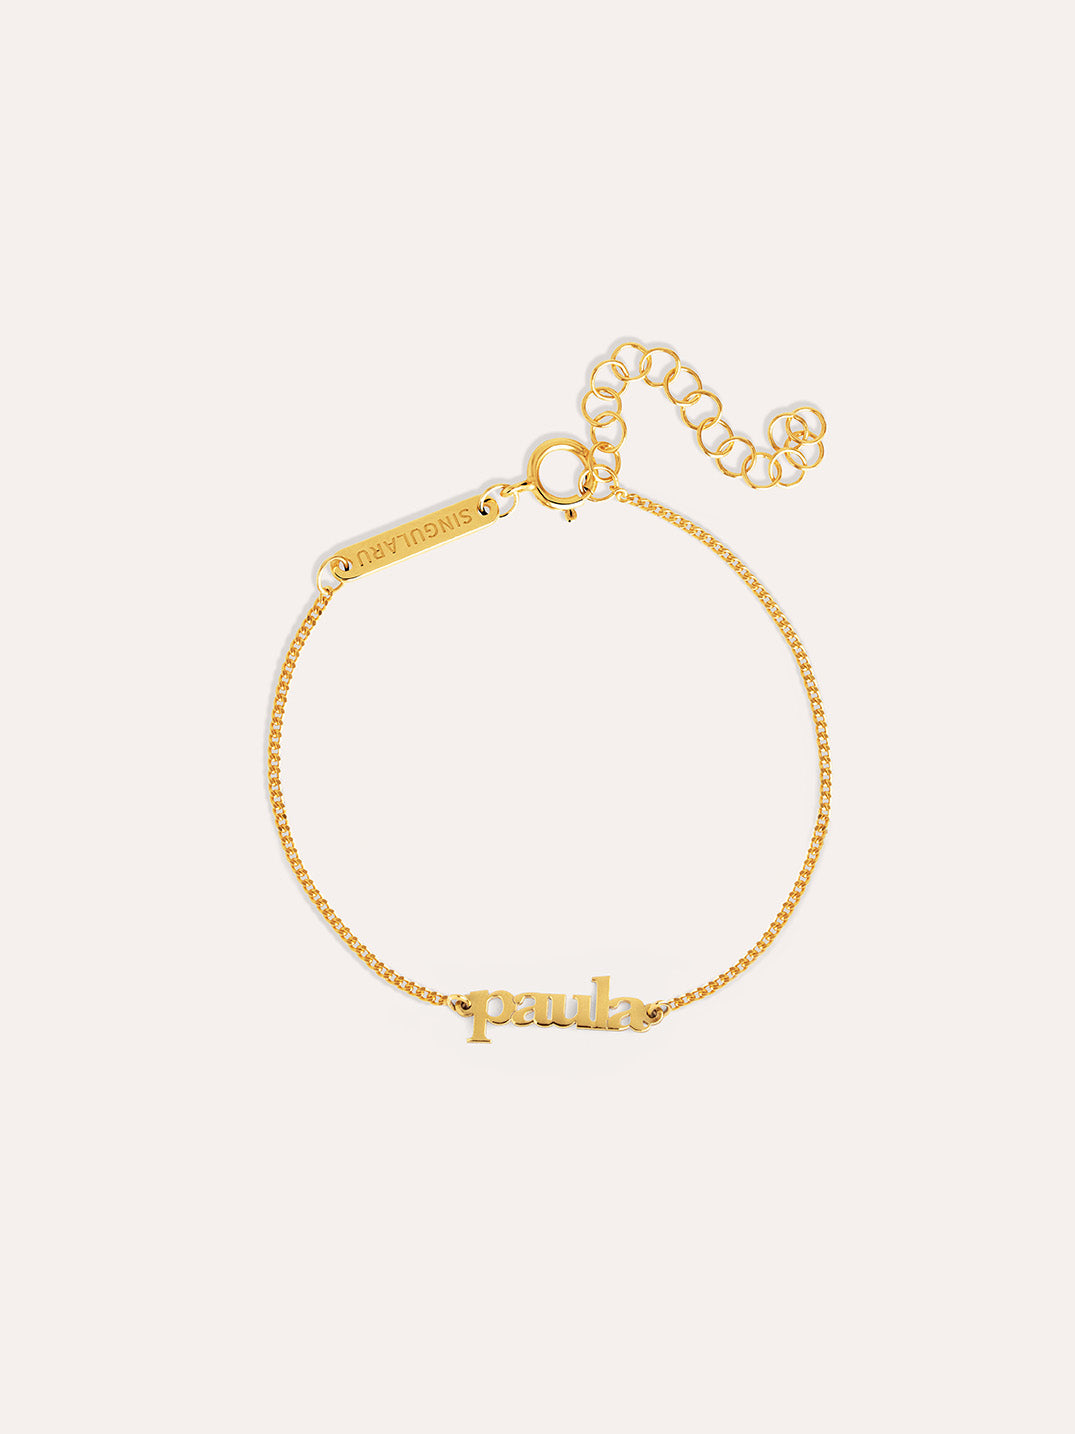 Monogram Personalized Gold Bracelet